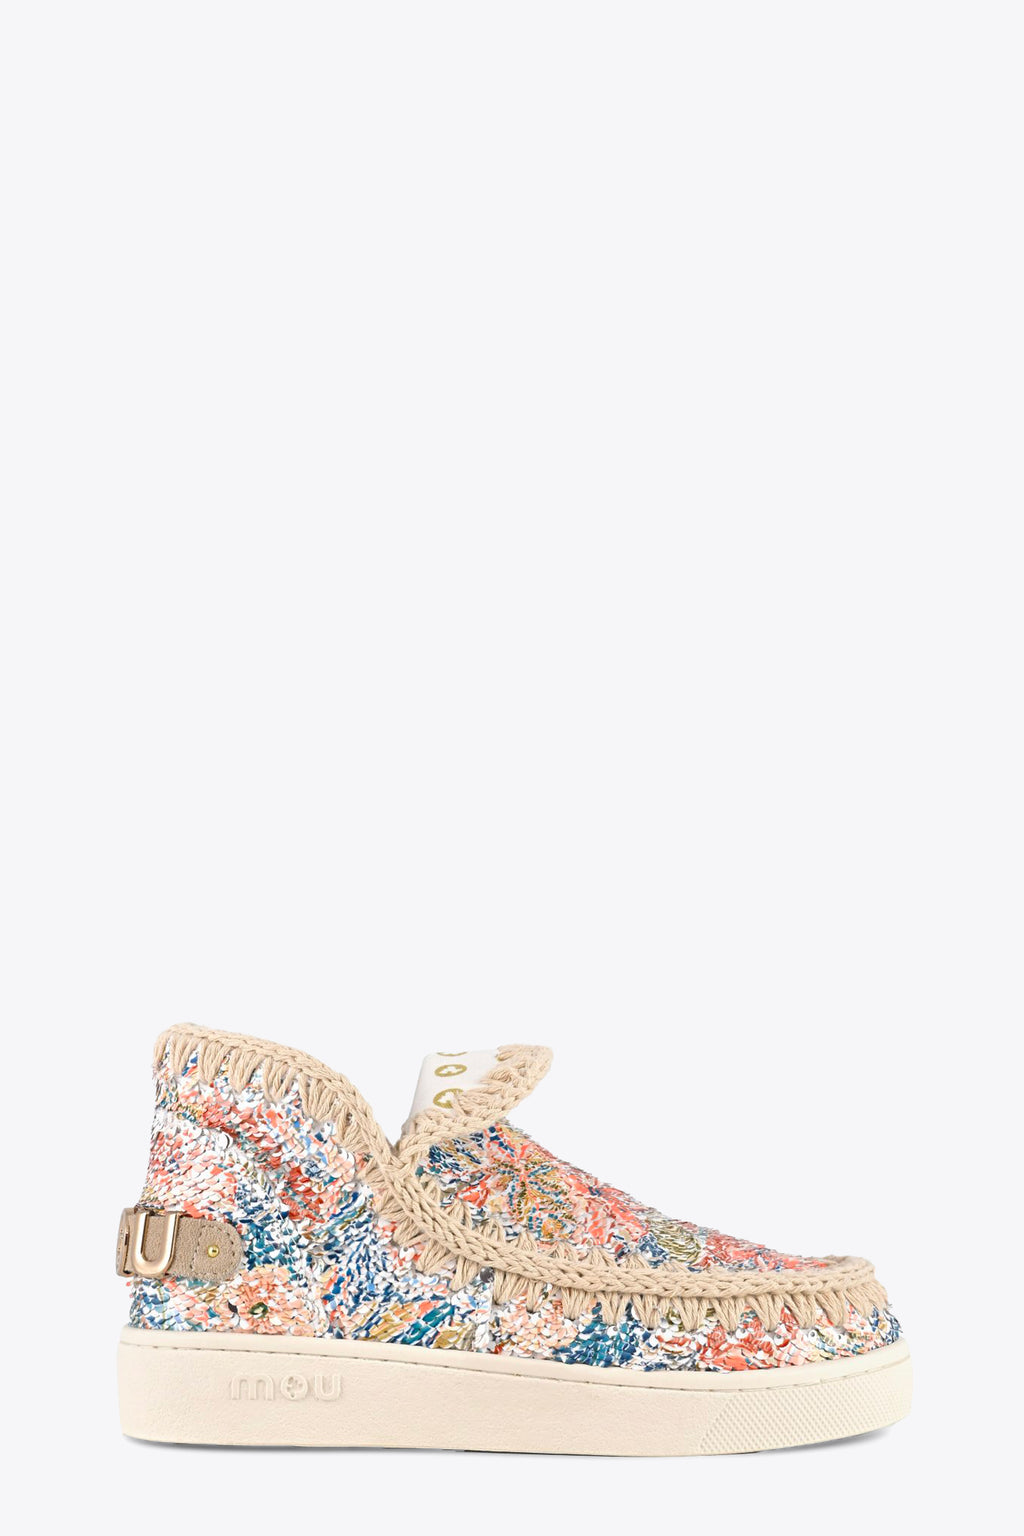 alt-image__Multicolour-printed-sequins-slip-on-sneaker---Summer-eskimo-sneaker-printed-sequins